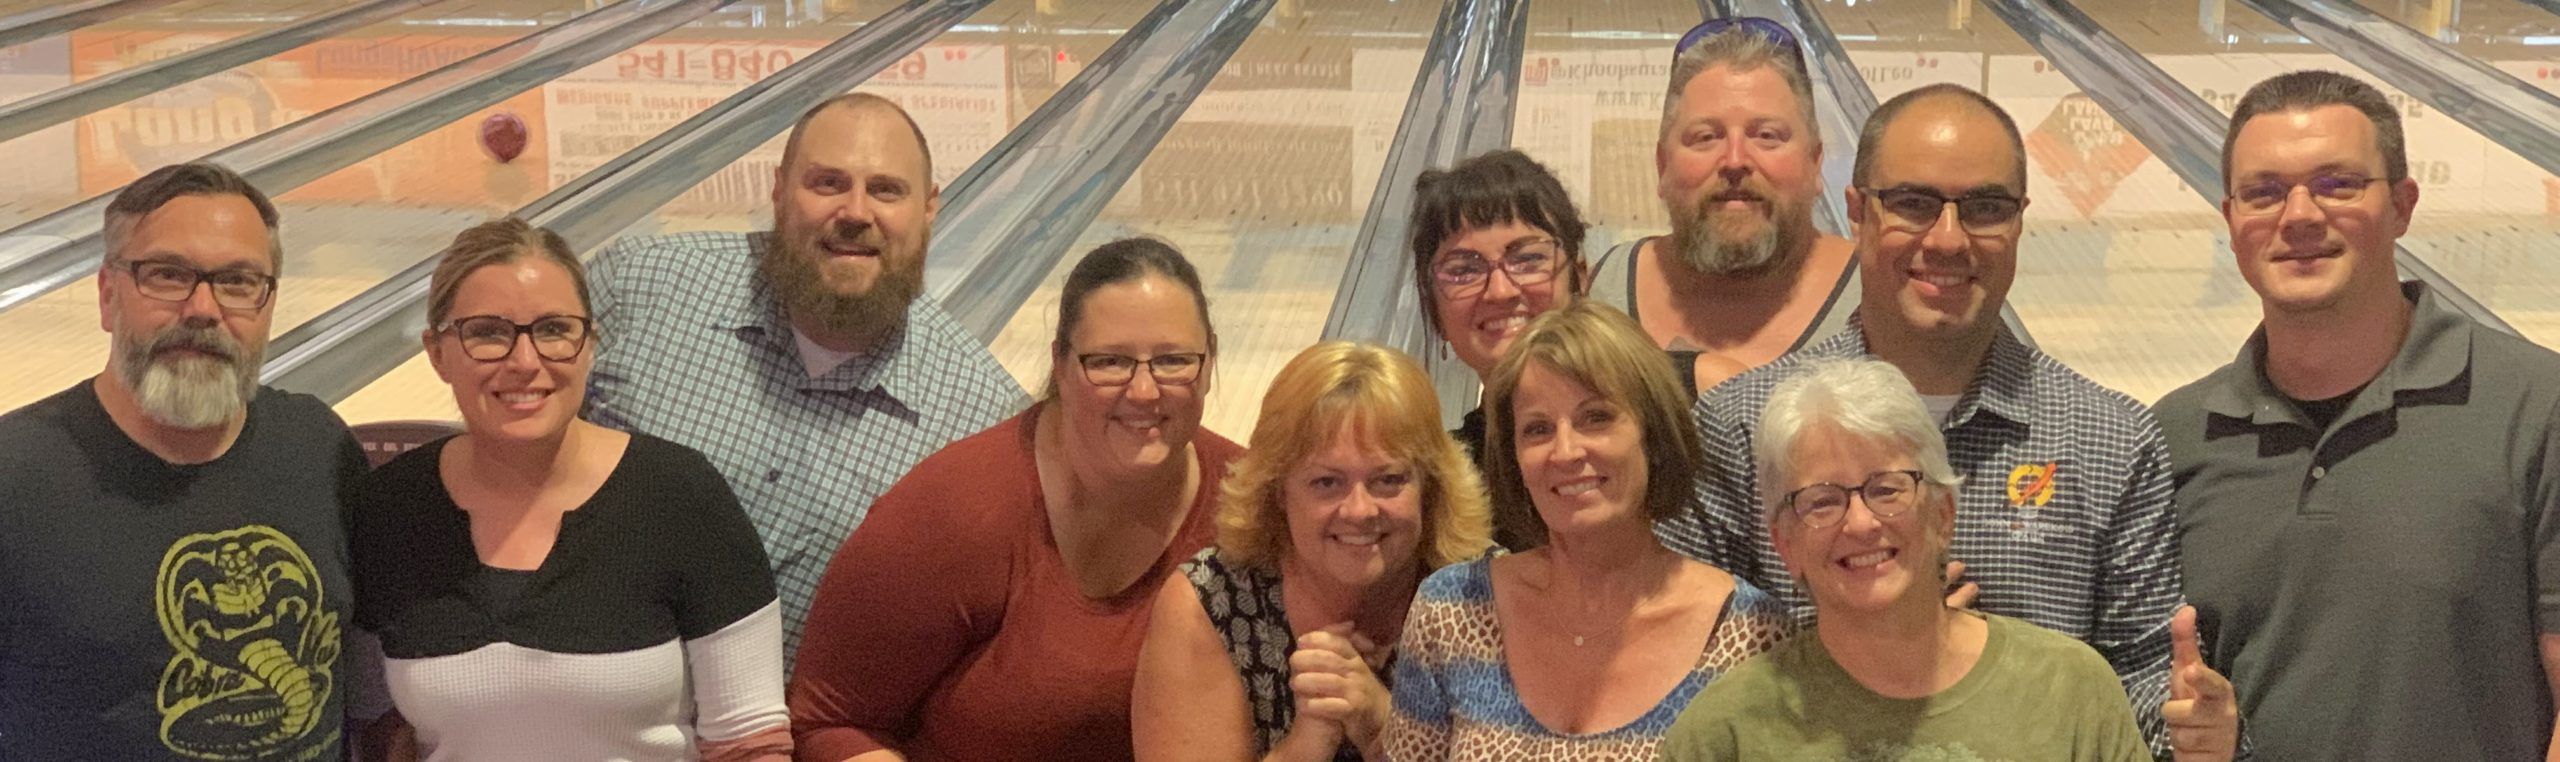 The John Warekois team at a bowling alley